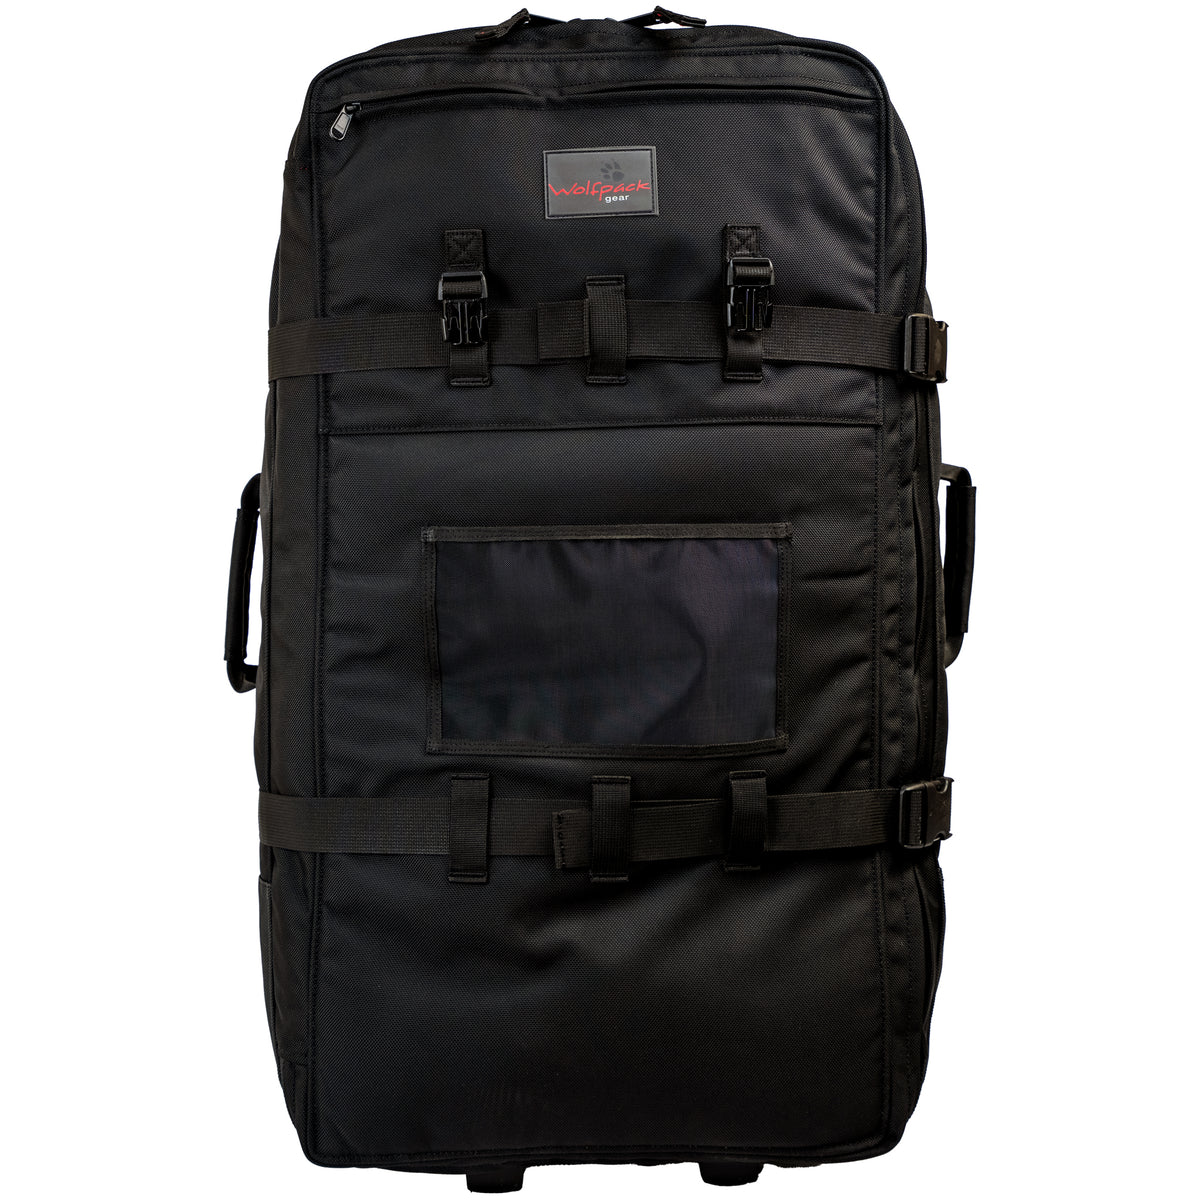 Wolfpack Gear™ Max Air Roller Bag